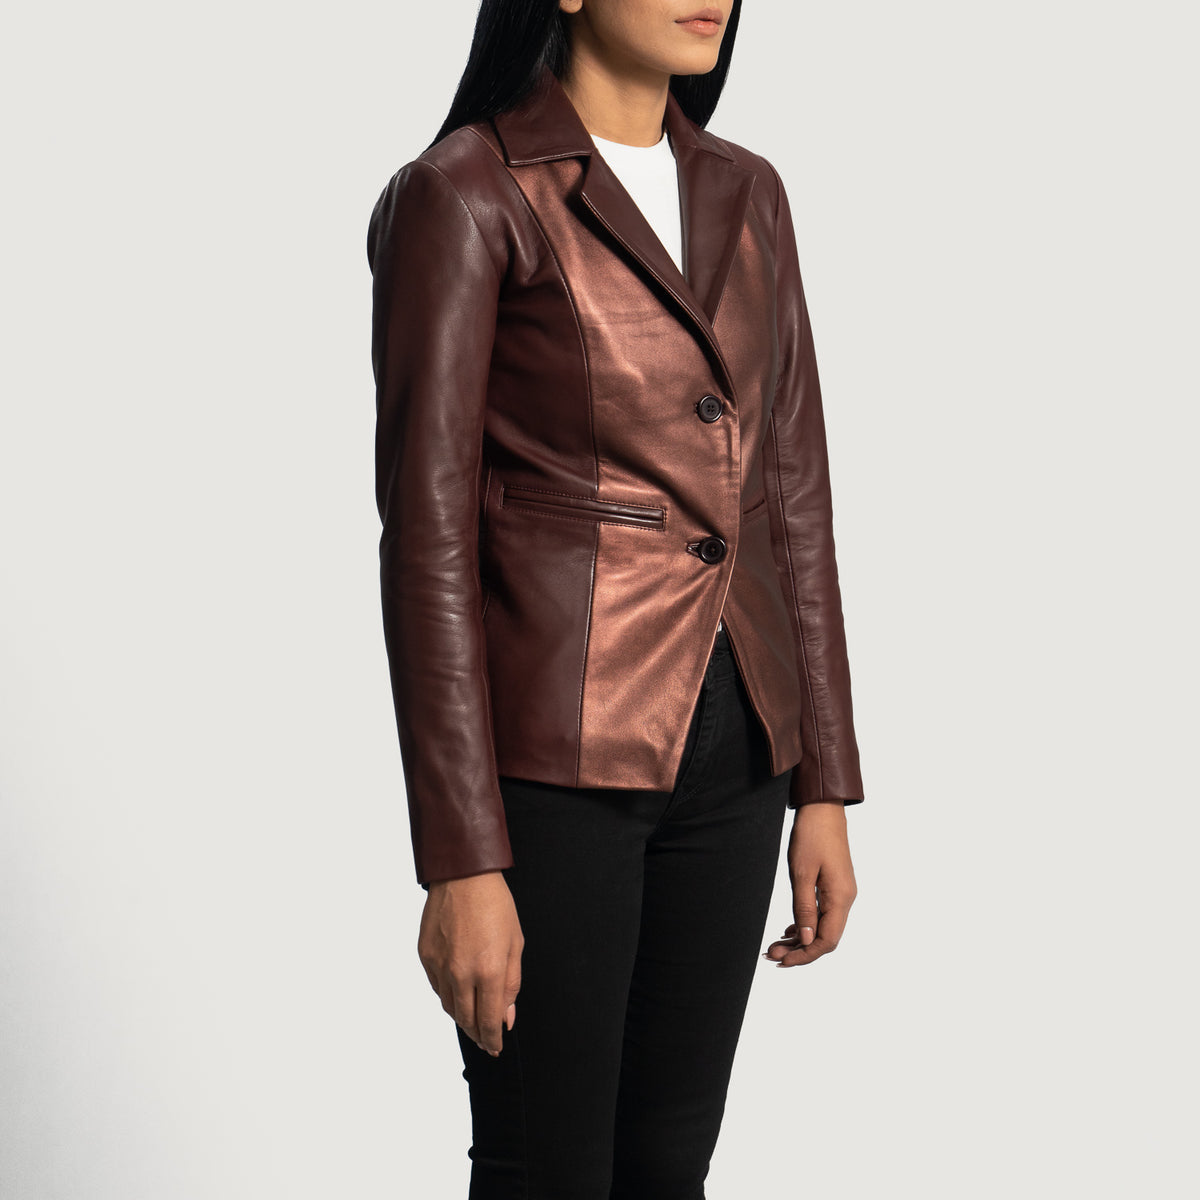 Ace Ruby Metallic Maroon Leather Blazer Plus Size